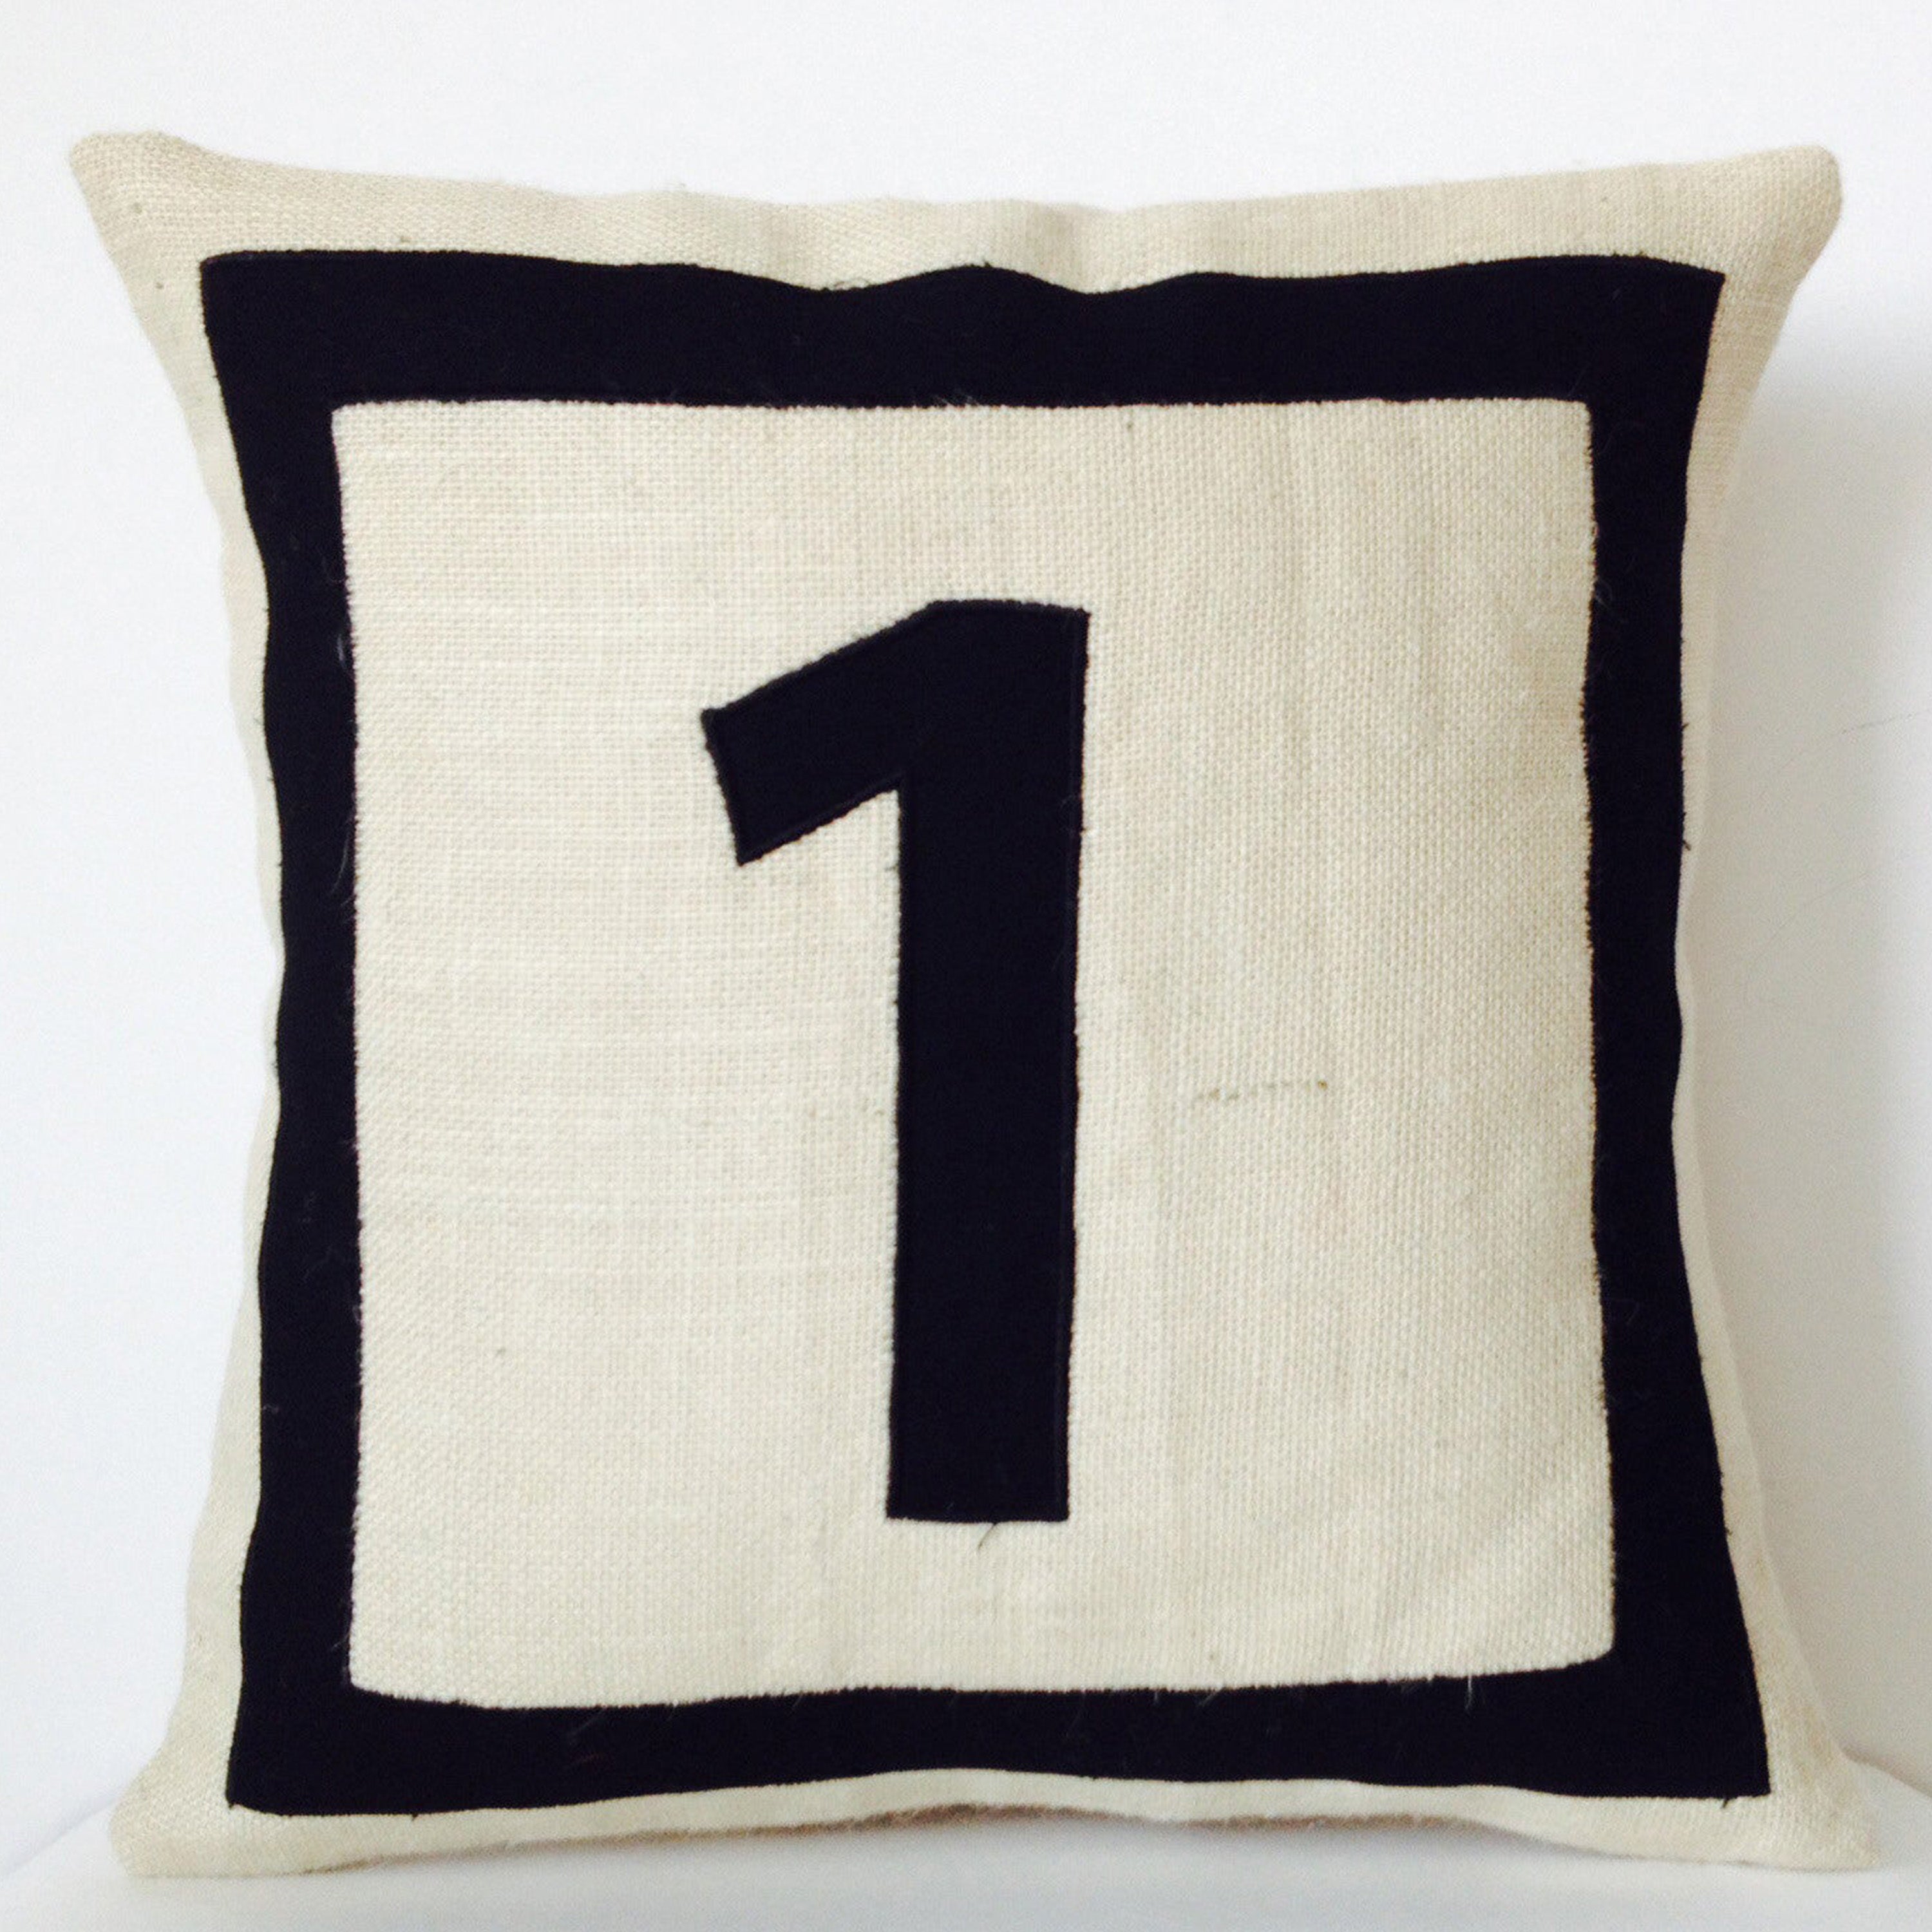 Personalized Monogram throw pillow- Burlap pillows- Black monogram cushion -applique -initial pillow -Decorative pillow covers- 16x16 pillow